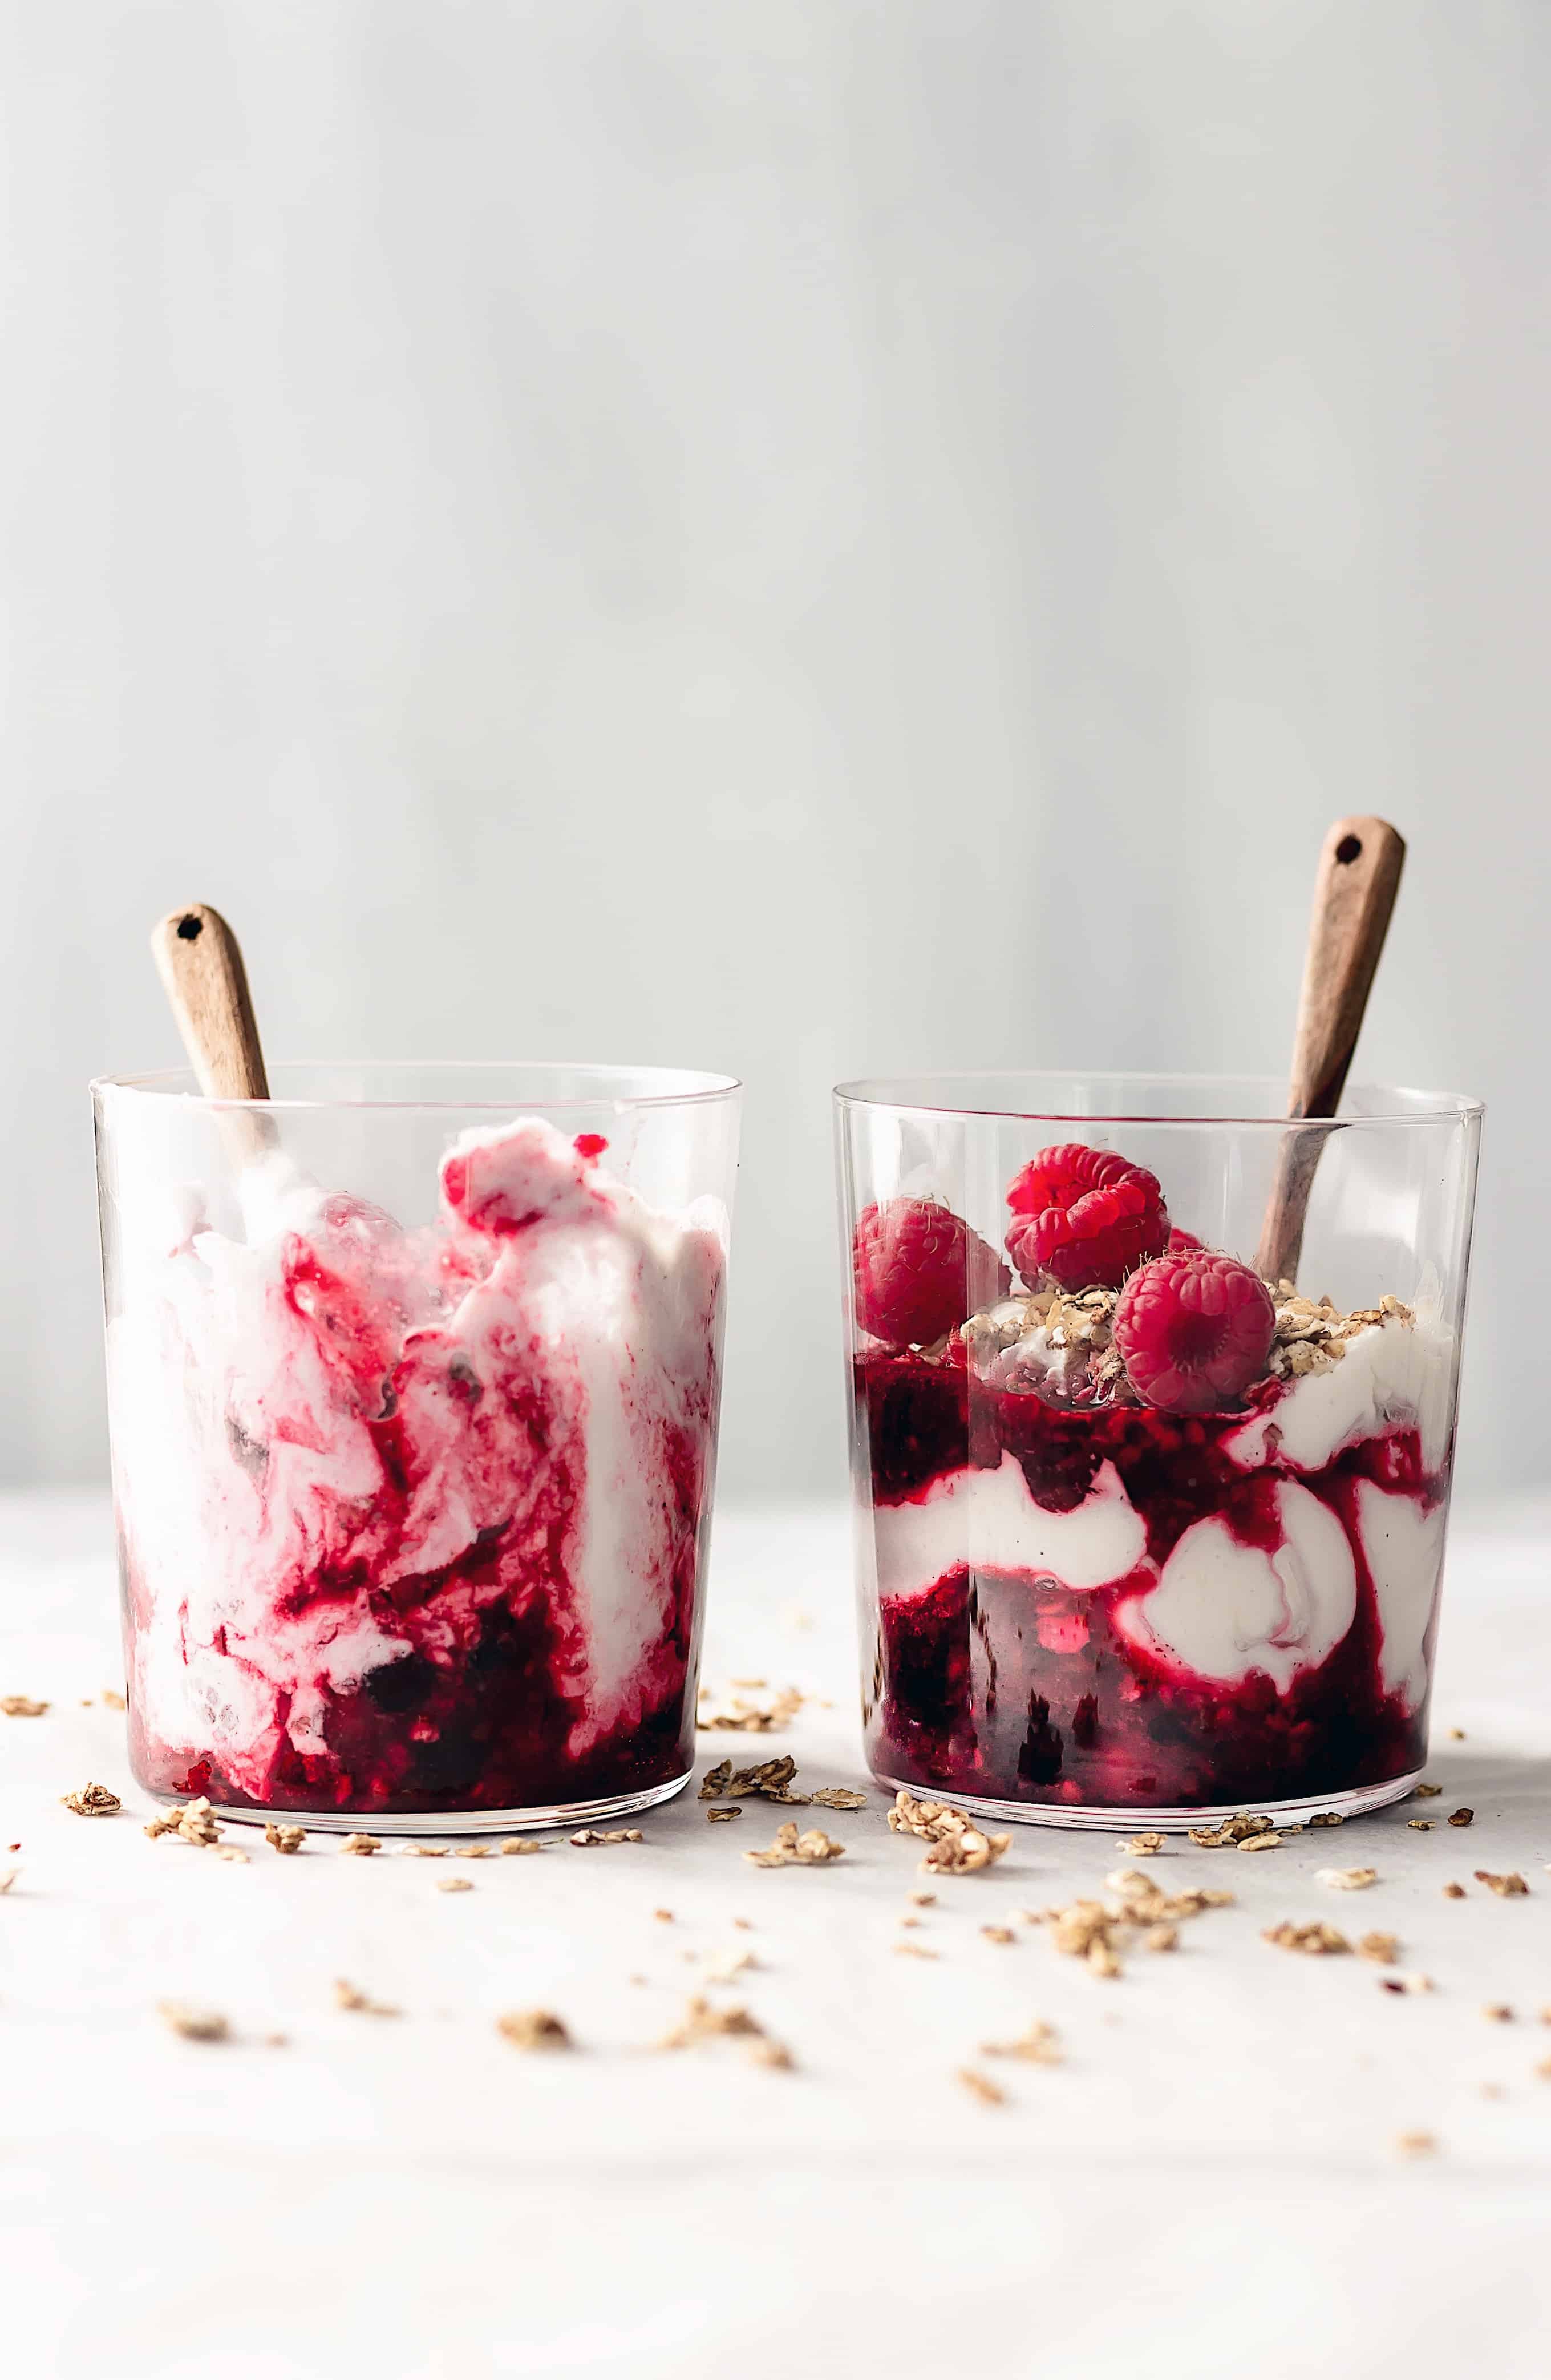 Vegan cranachan cream raspberry pudding